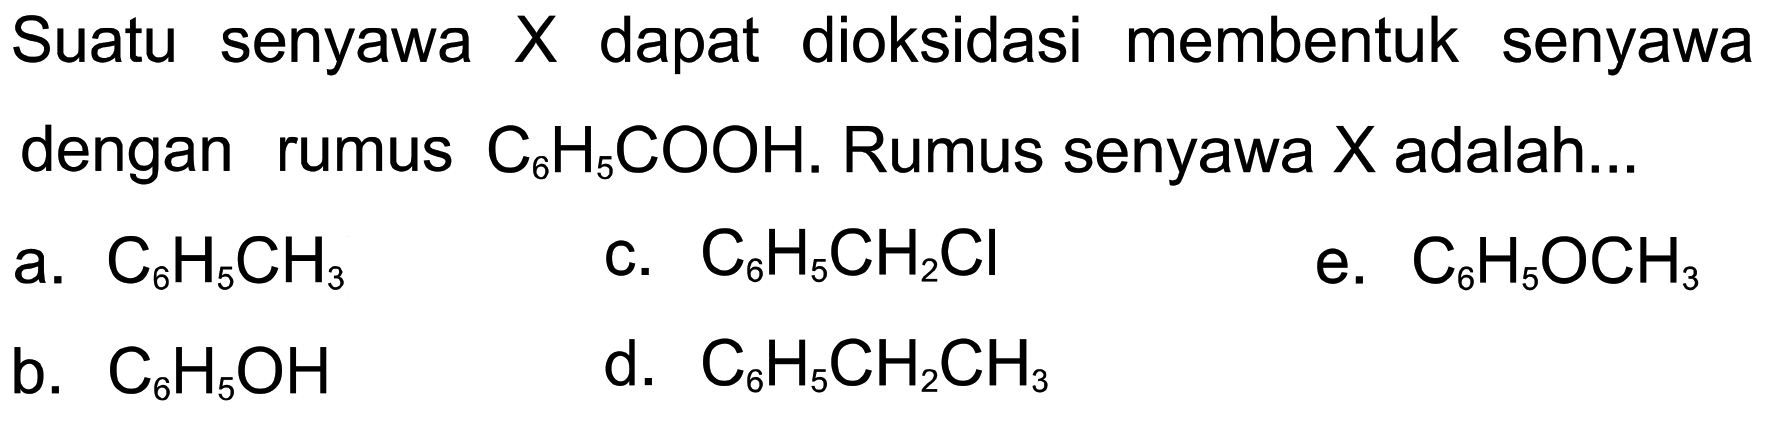 Suatu senyawa  X  dapat dioksidasi membentuk senyawa dengan rumus C6 H5 COOH. Rumus senyawa X adalah...
a. C6 H5 CH3
c. C6 H5 CH2 Cl
e. C6 H5 OCH3
b. C6 H5 OH
d. C6 H5 CH2 CH3